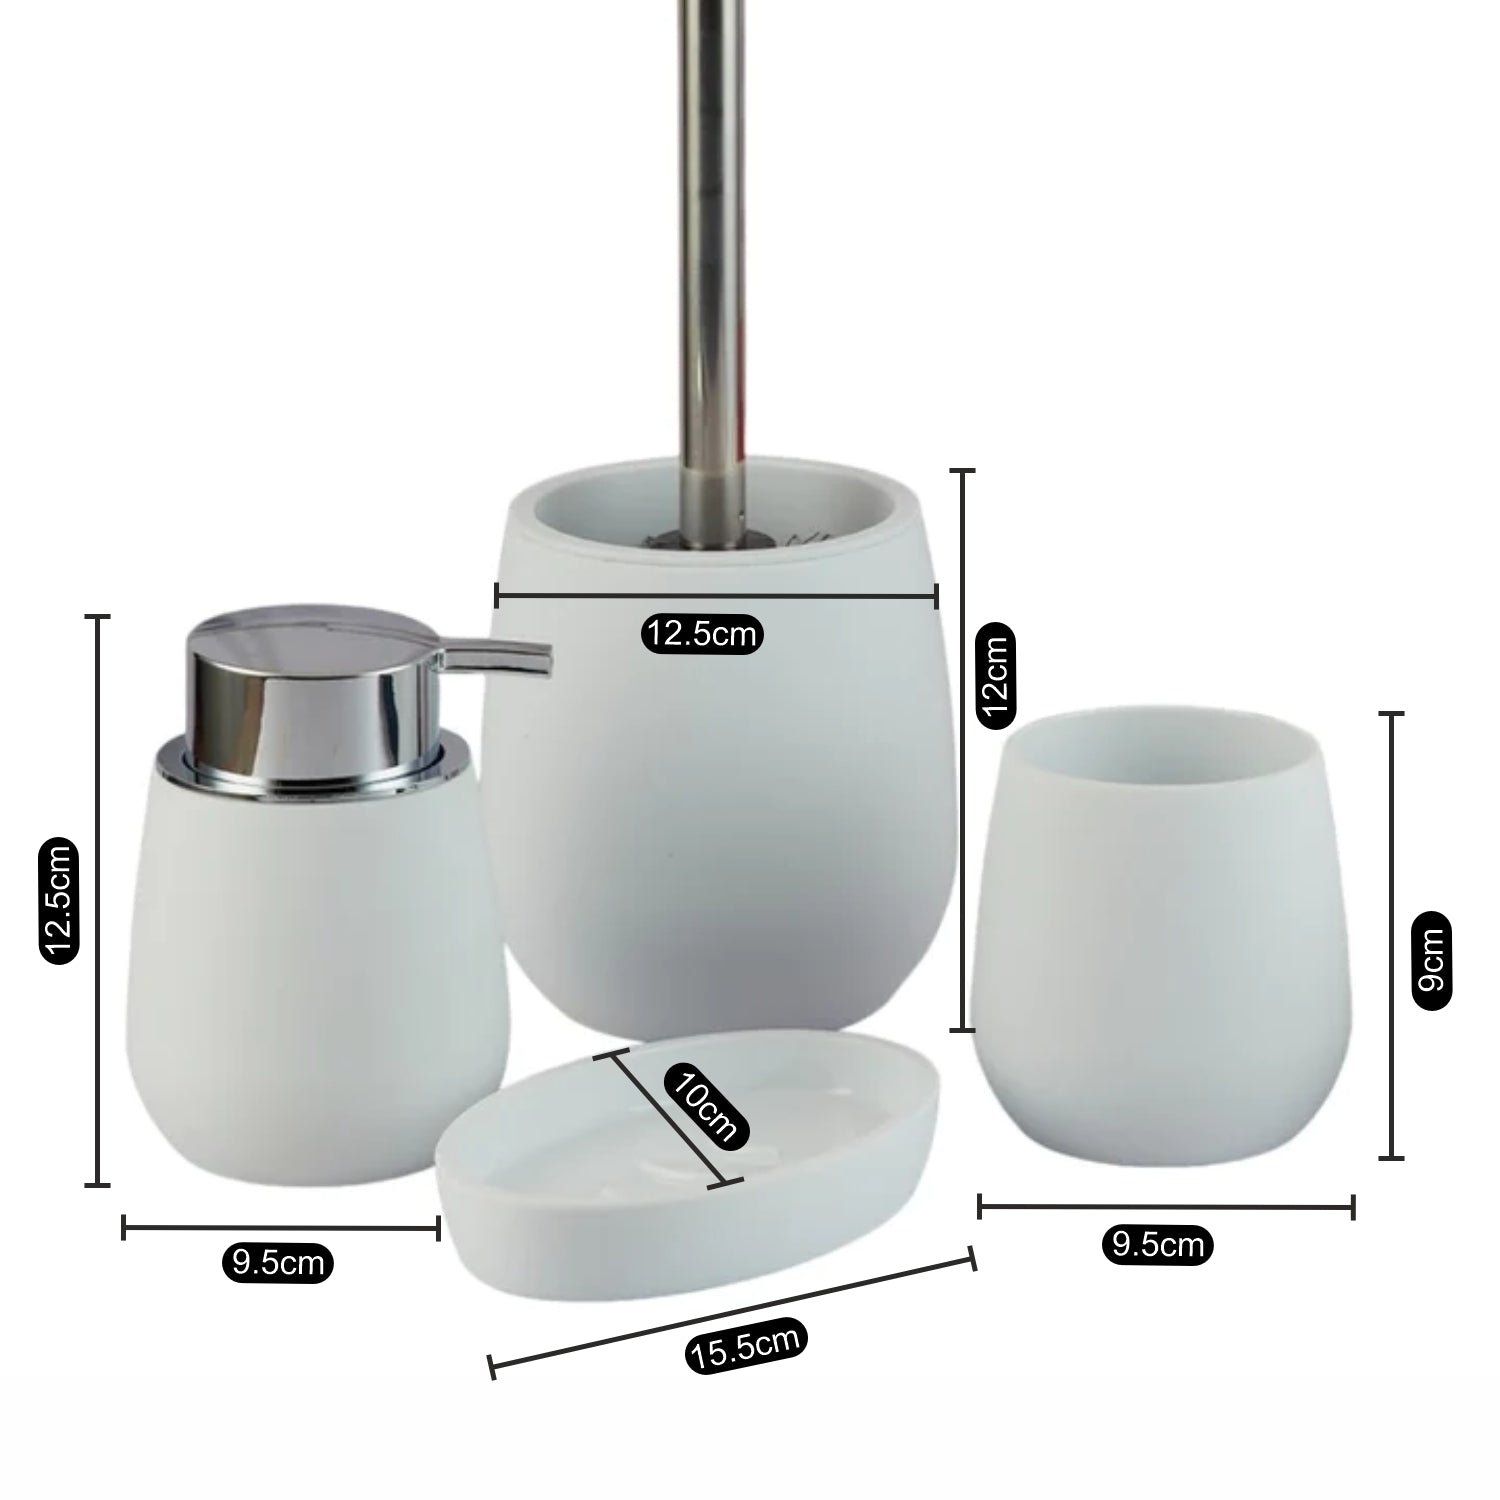 Acrylic Bathroom Accessories Set of 5 Bath Set with Soap Dispenser (10030)